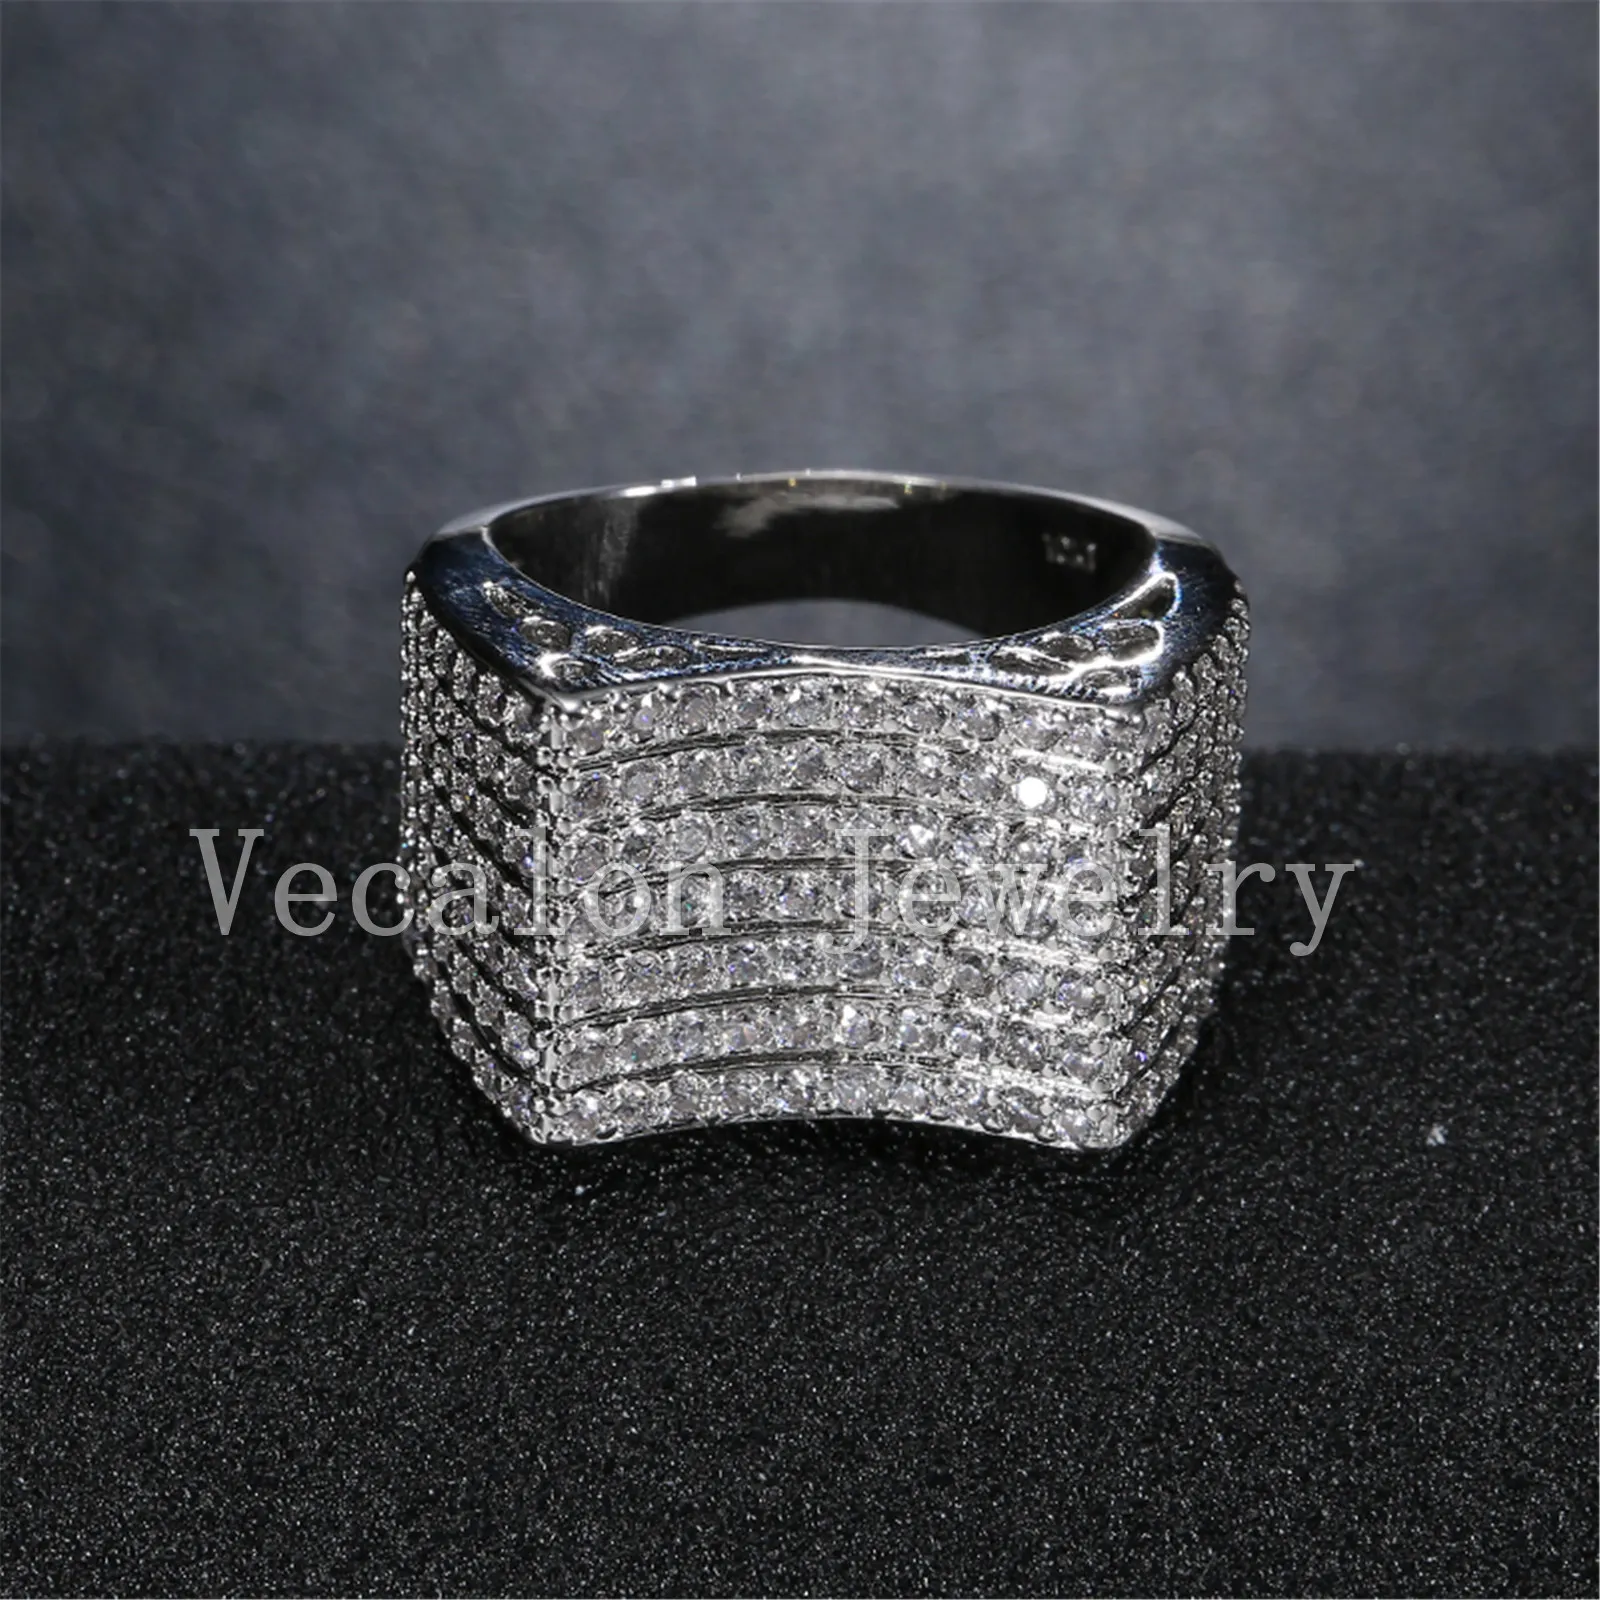 Vecalon Handgemaakte 158 stks Topaz Gesimuleerde Diamond CZ Vrouwelijke Wedding Band 10kt Wit Gold Gevuld Verlovingsring voor Dames SZ 5-11